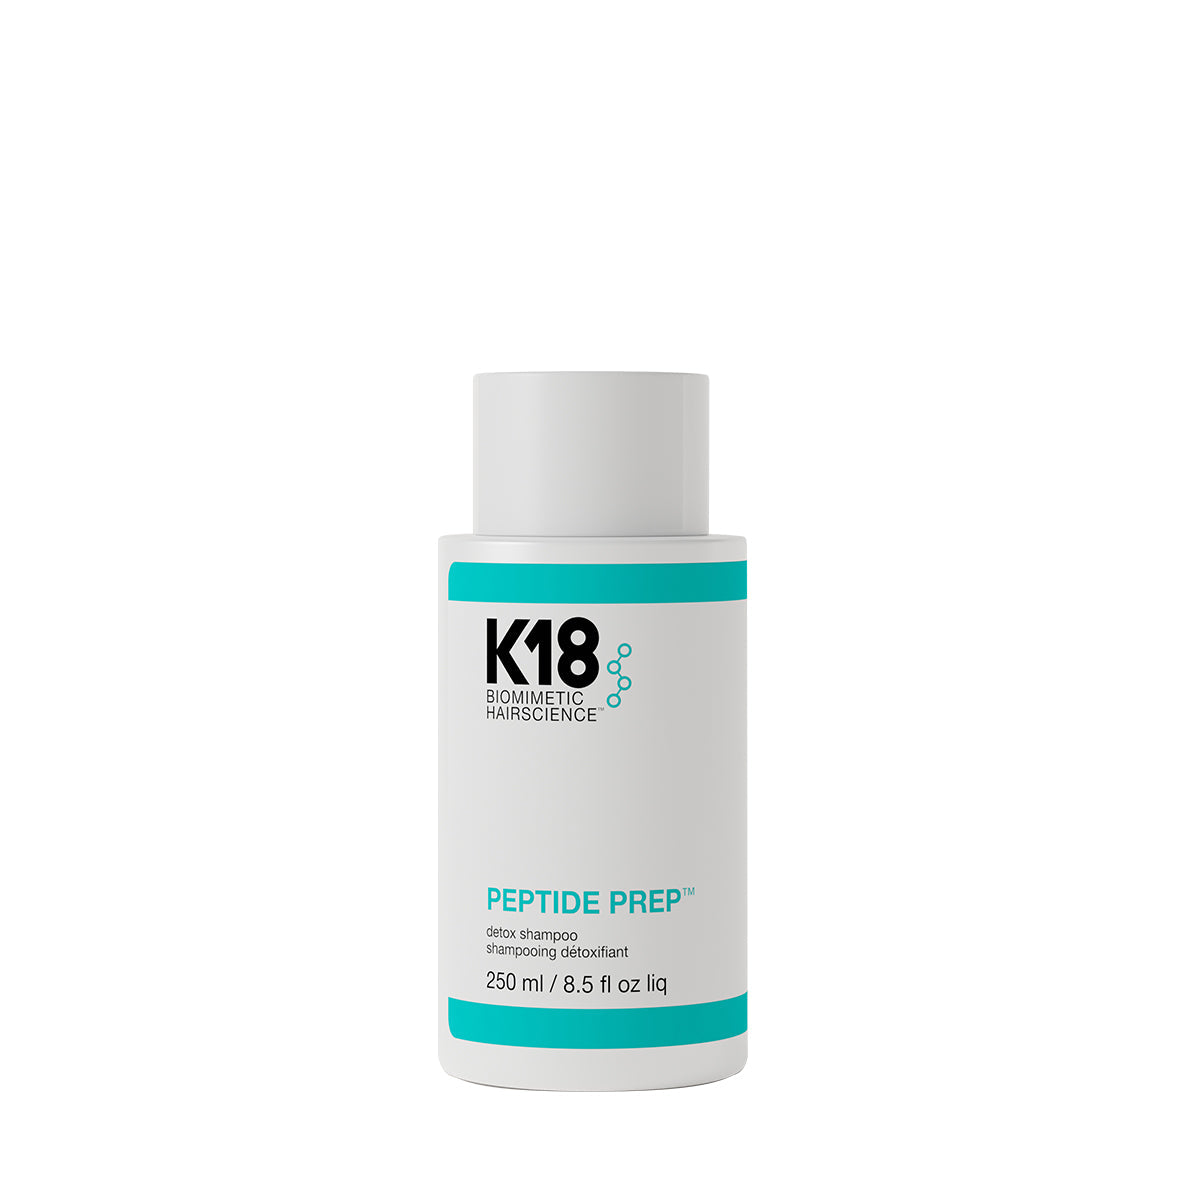 K18hair Peptide preptm detox shampoo